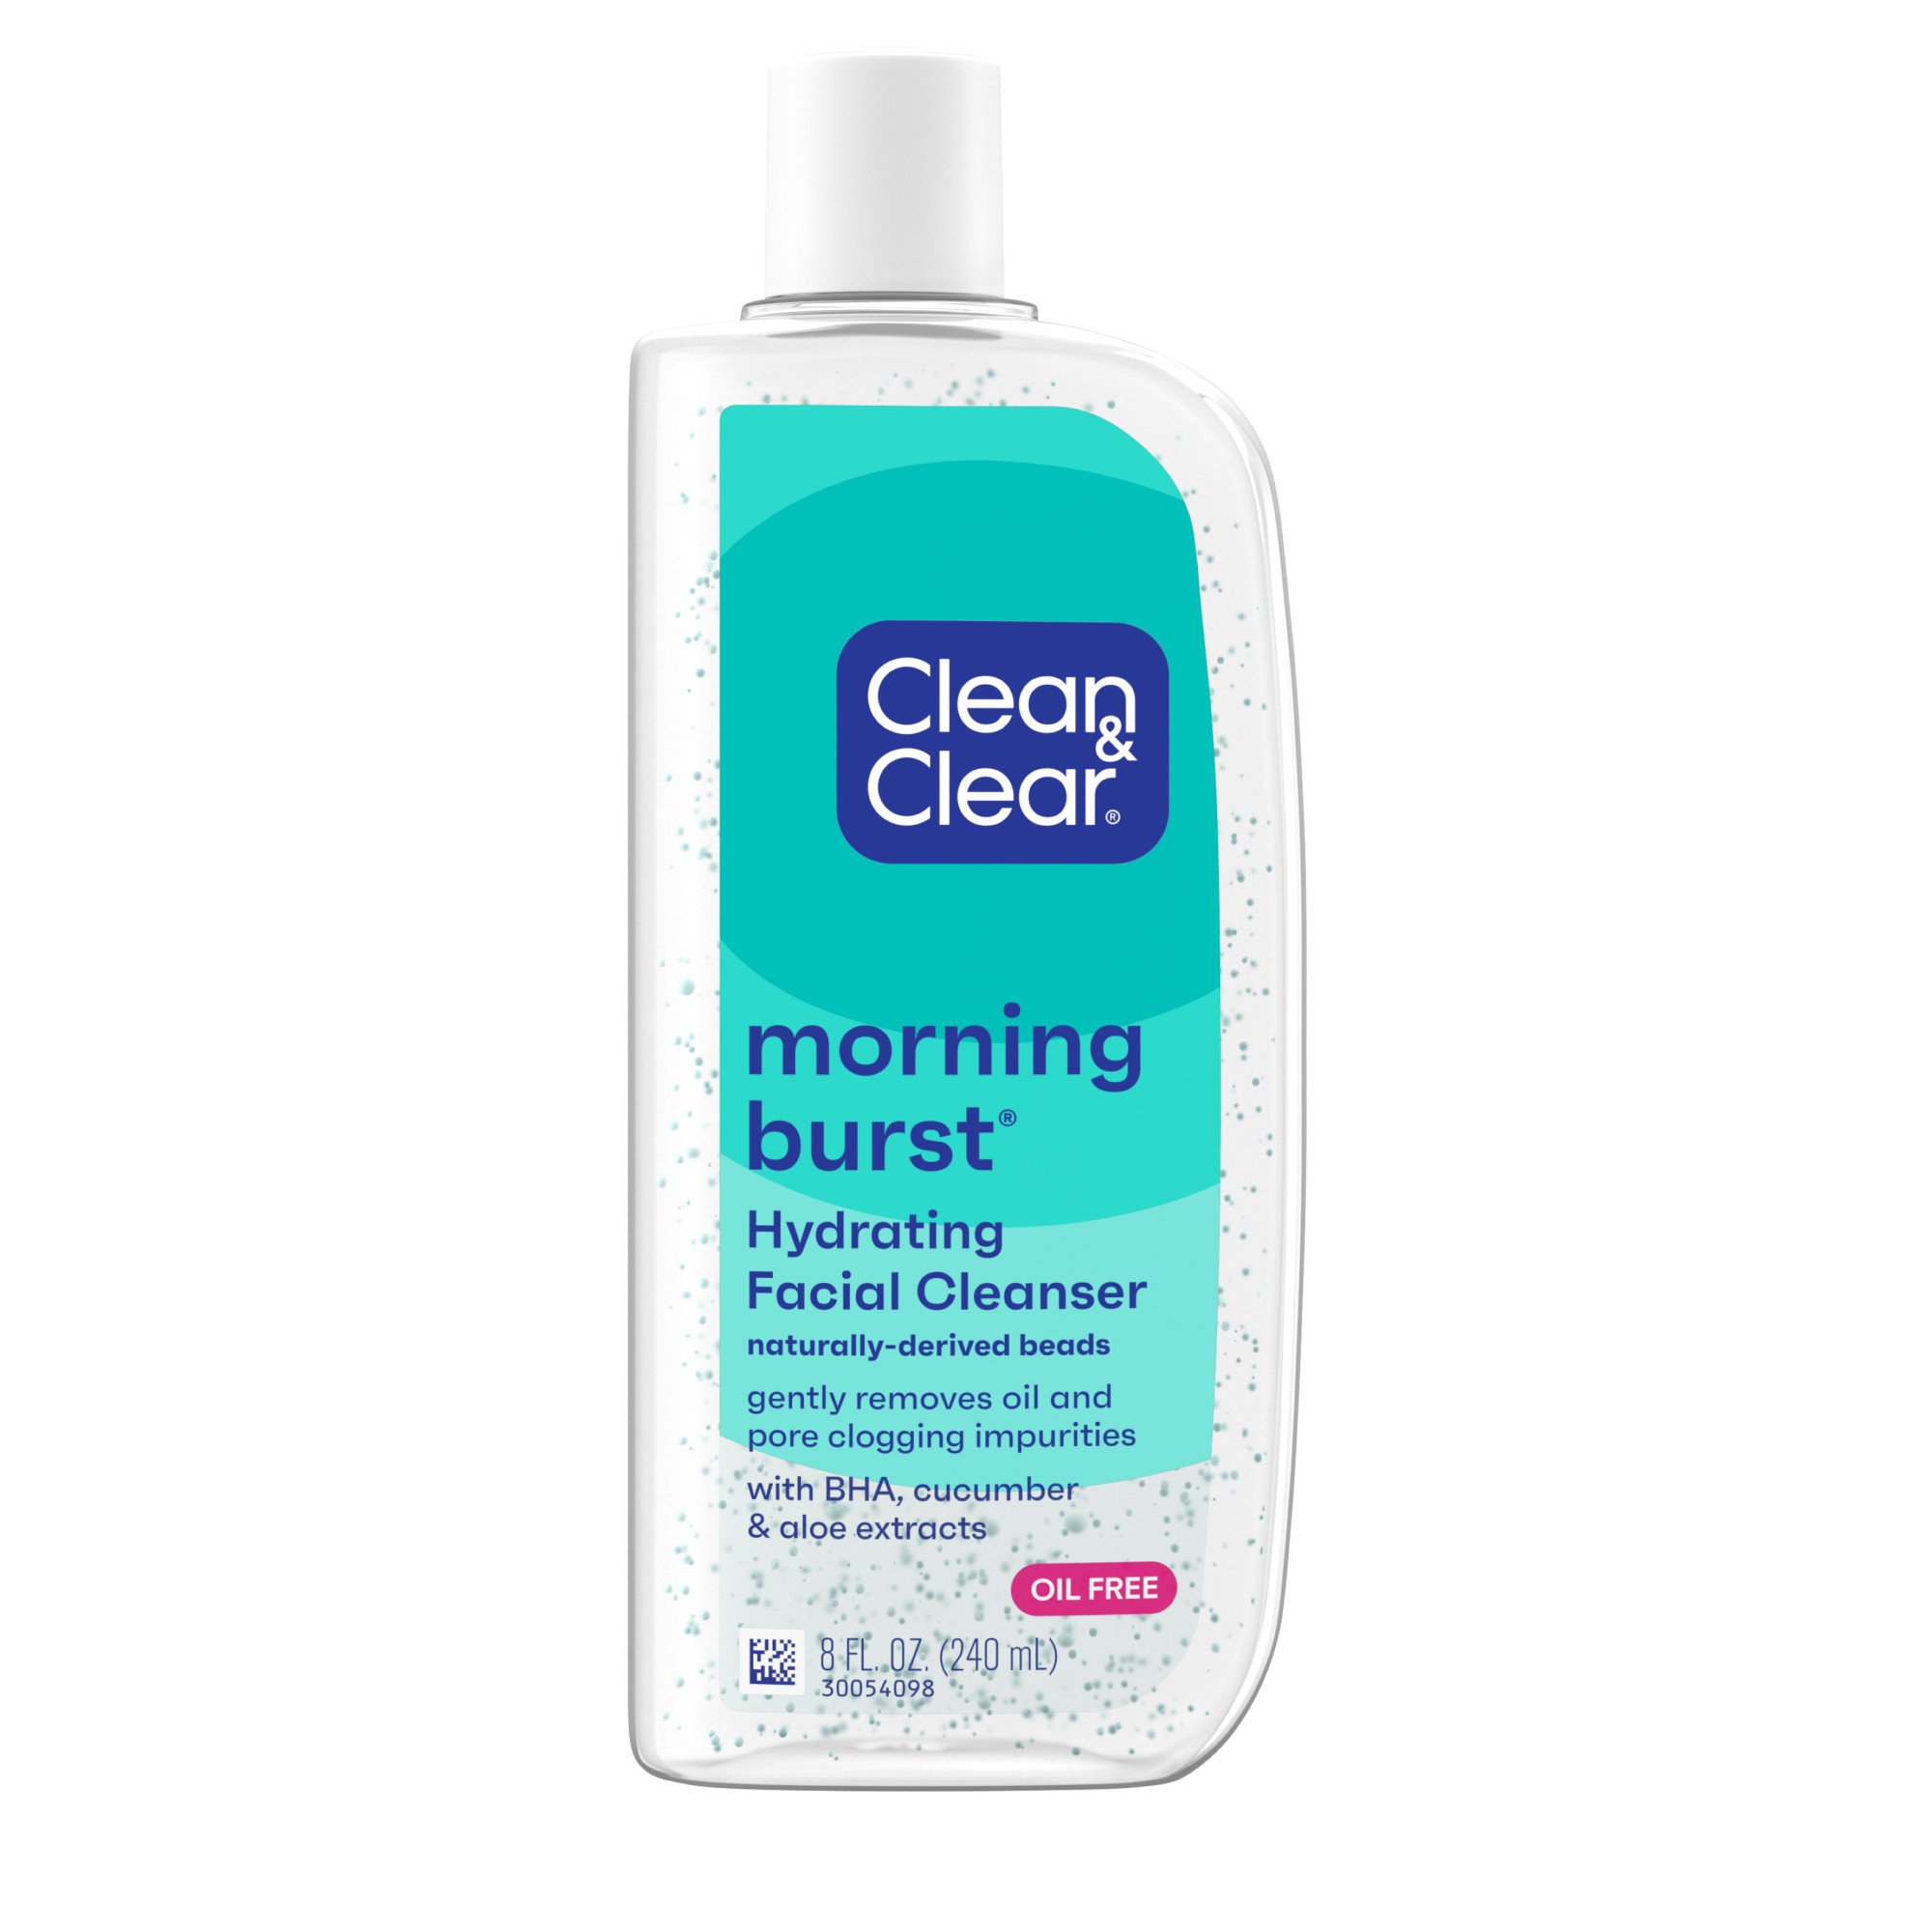 clean and clear morning burst facial scrub